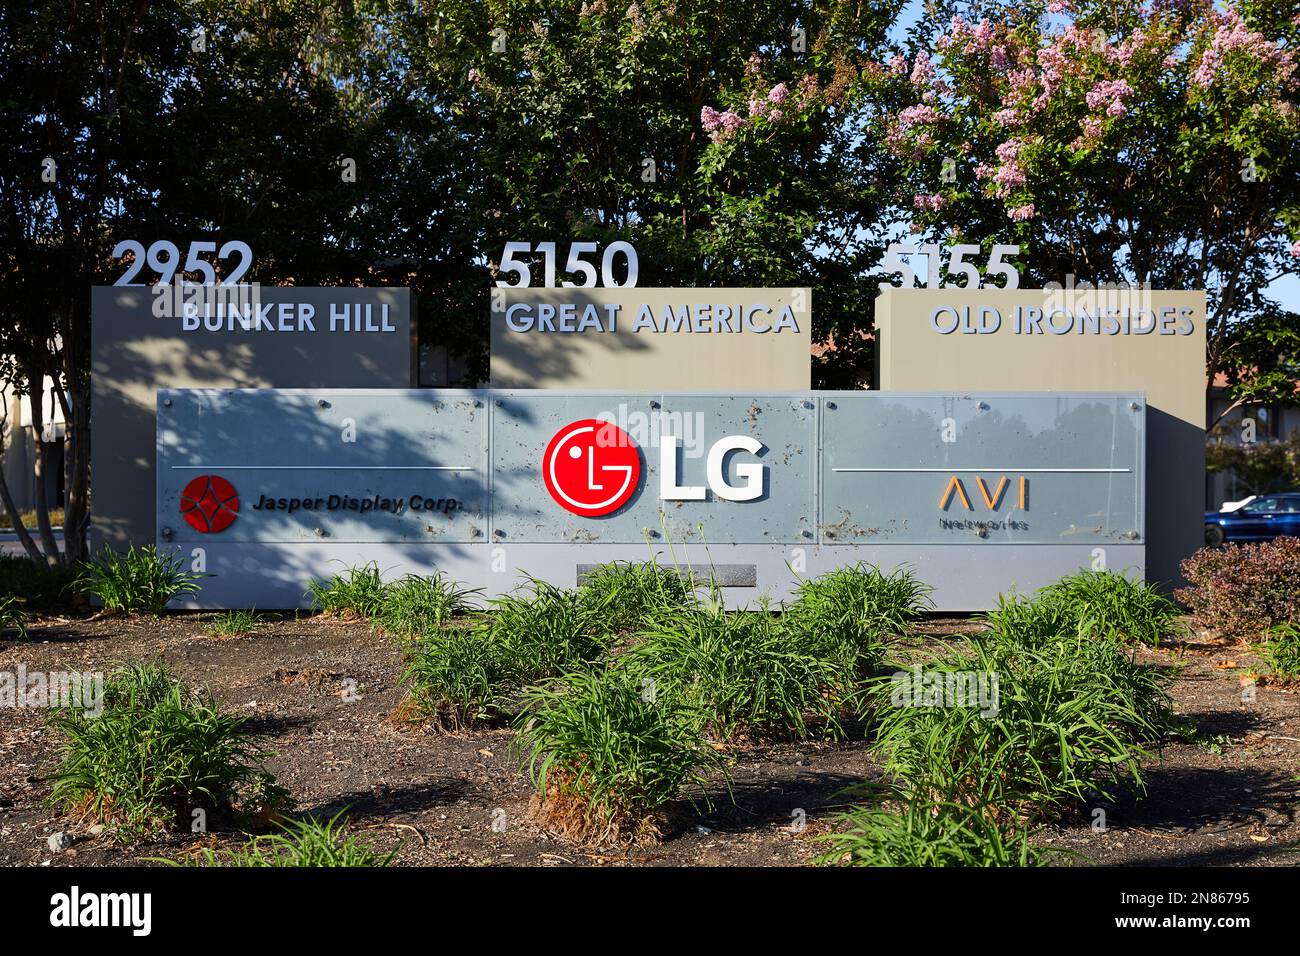 Jasper Display Corp., LG Silicon Valley Lab, Avi Networks, signs; Great America Pkwy, Santa Clara, California Stock Photo